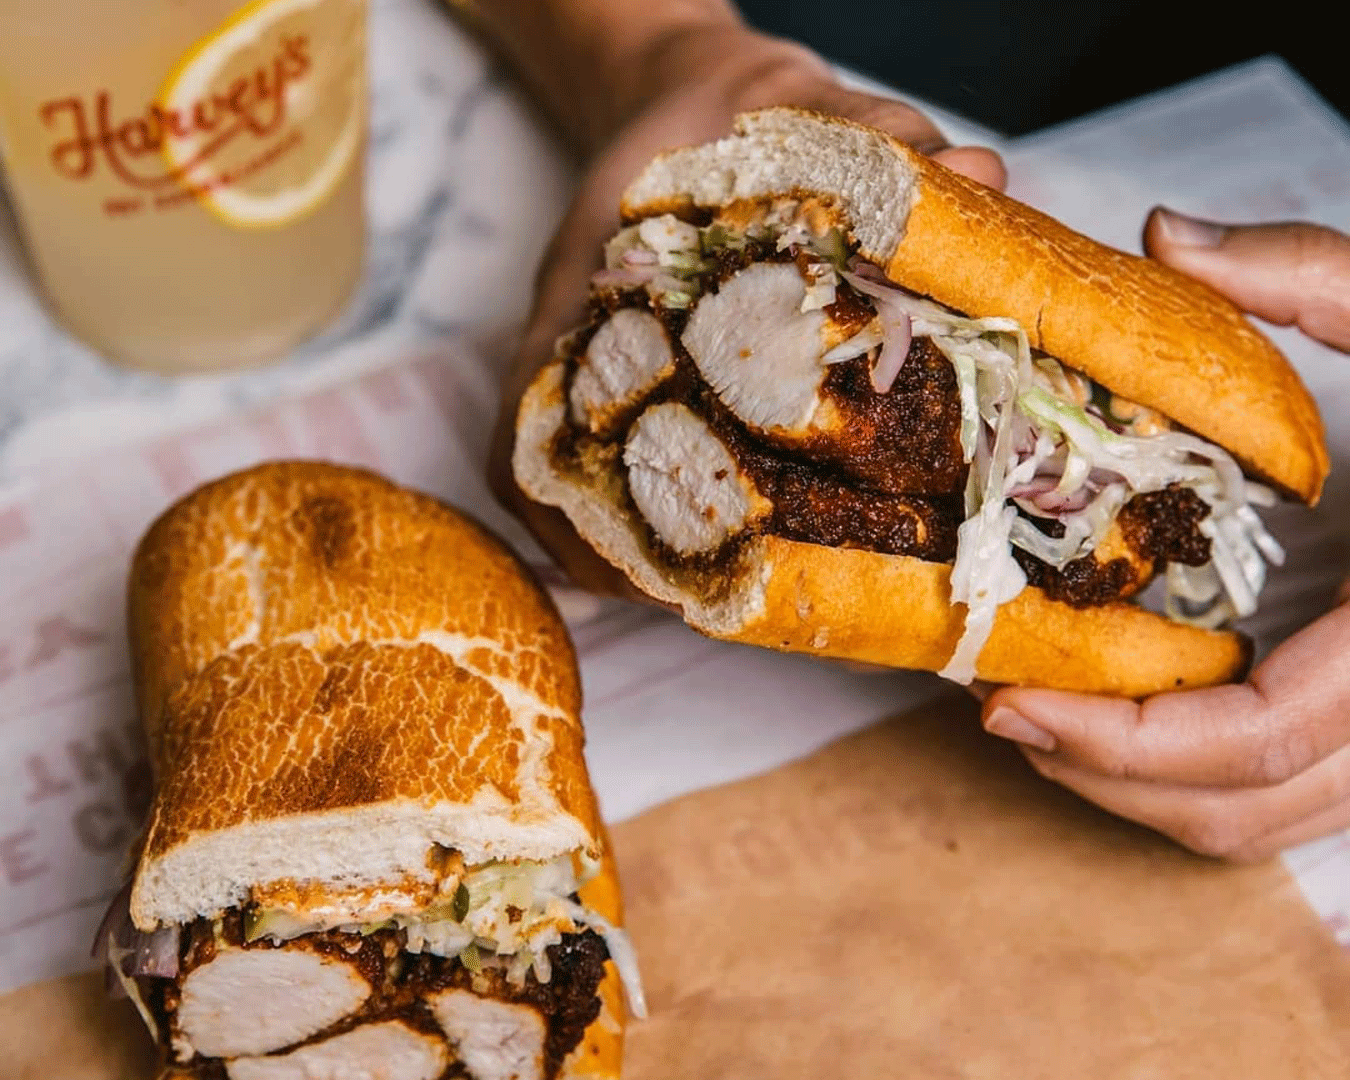 Hand holding sandwich roll